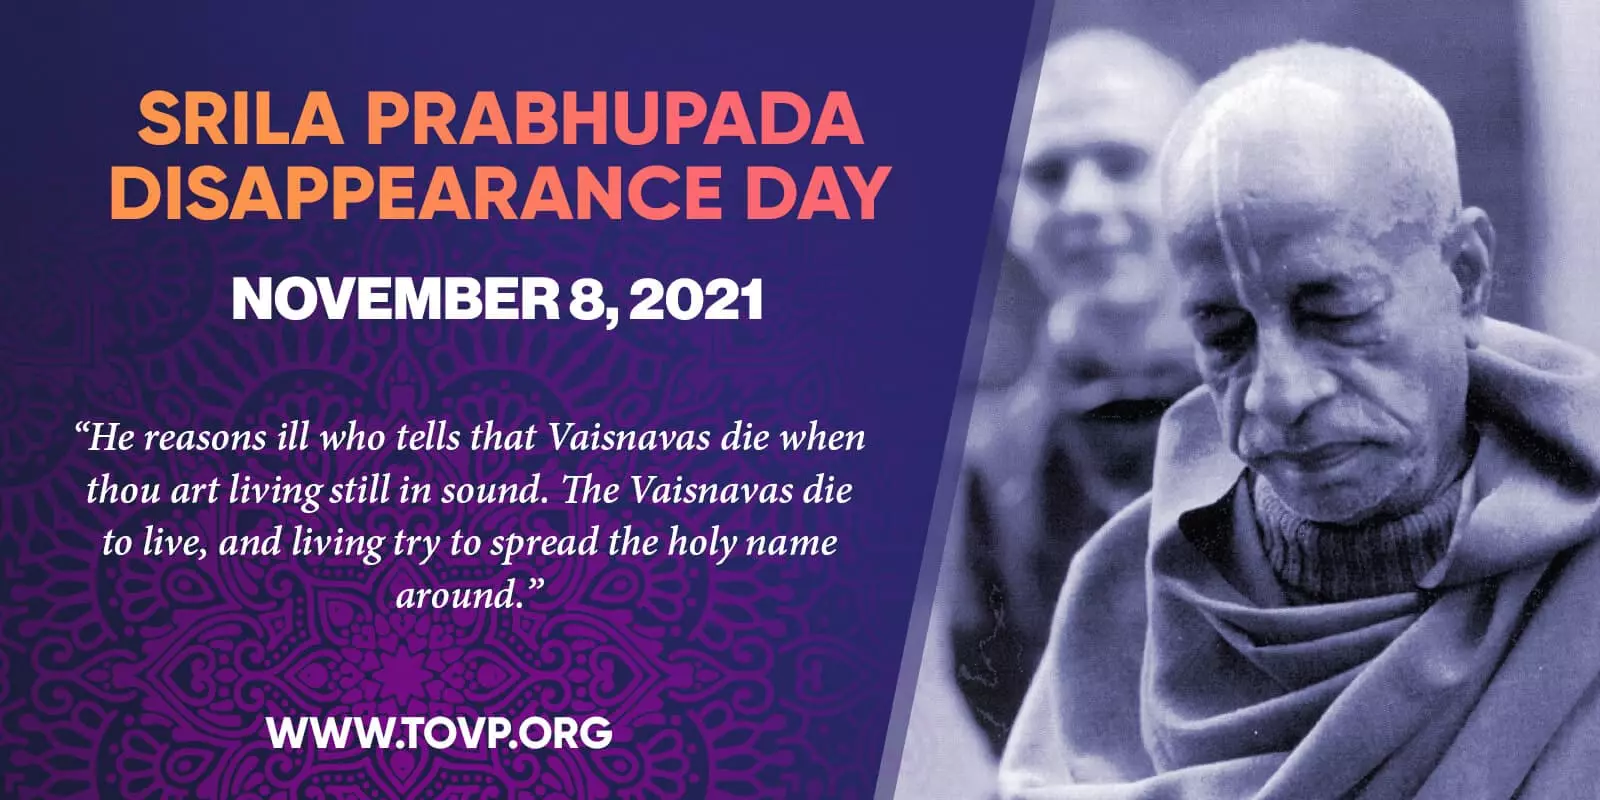 Srila Prabhupada's Disappearance Day and the TOVP